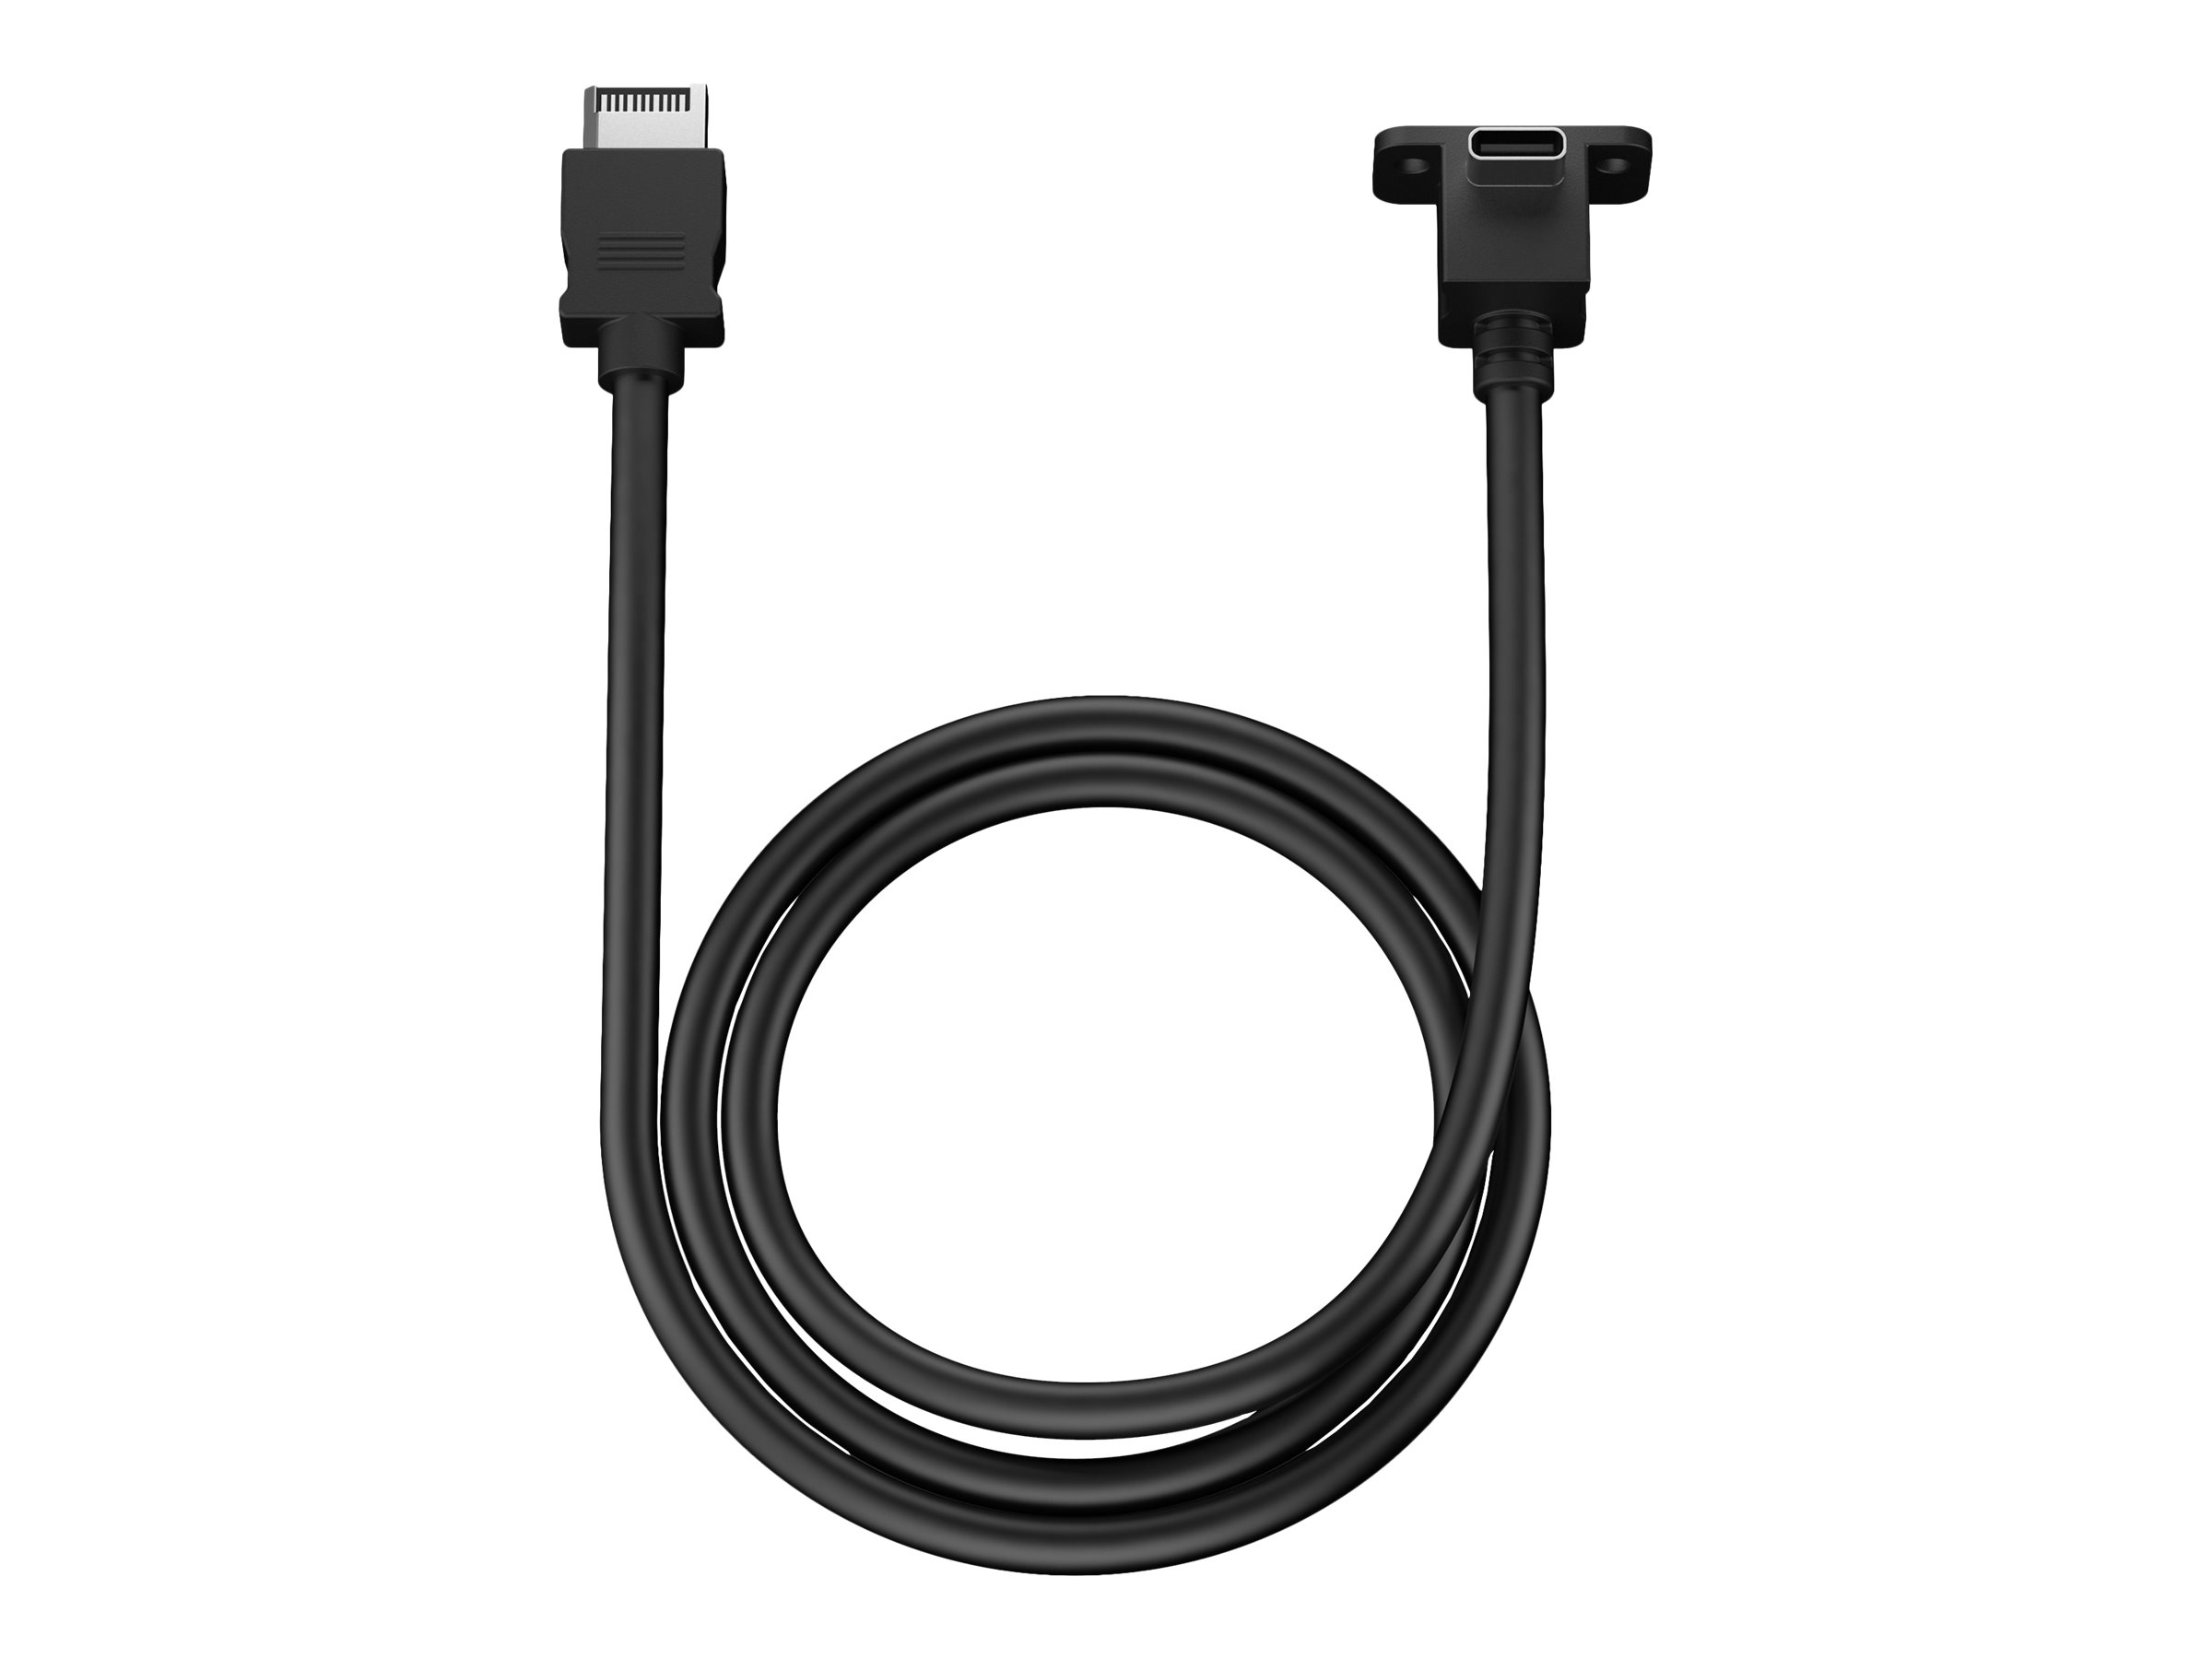 Fractal USB-C 10Gbps Cable - Model E